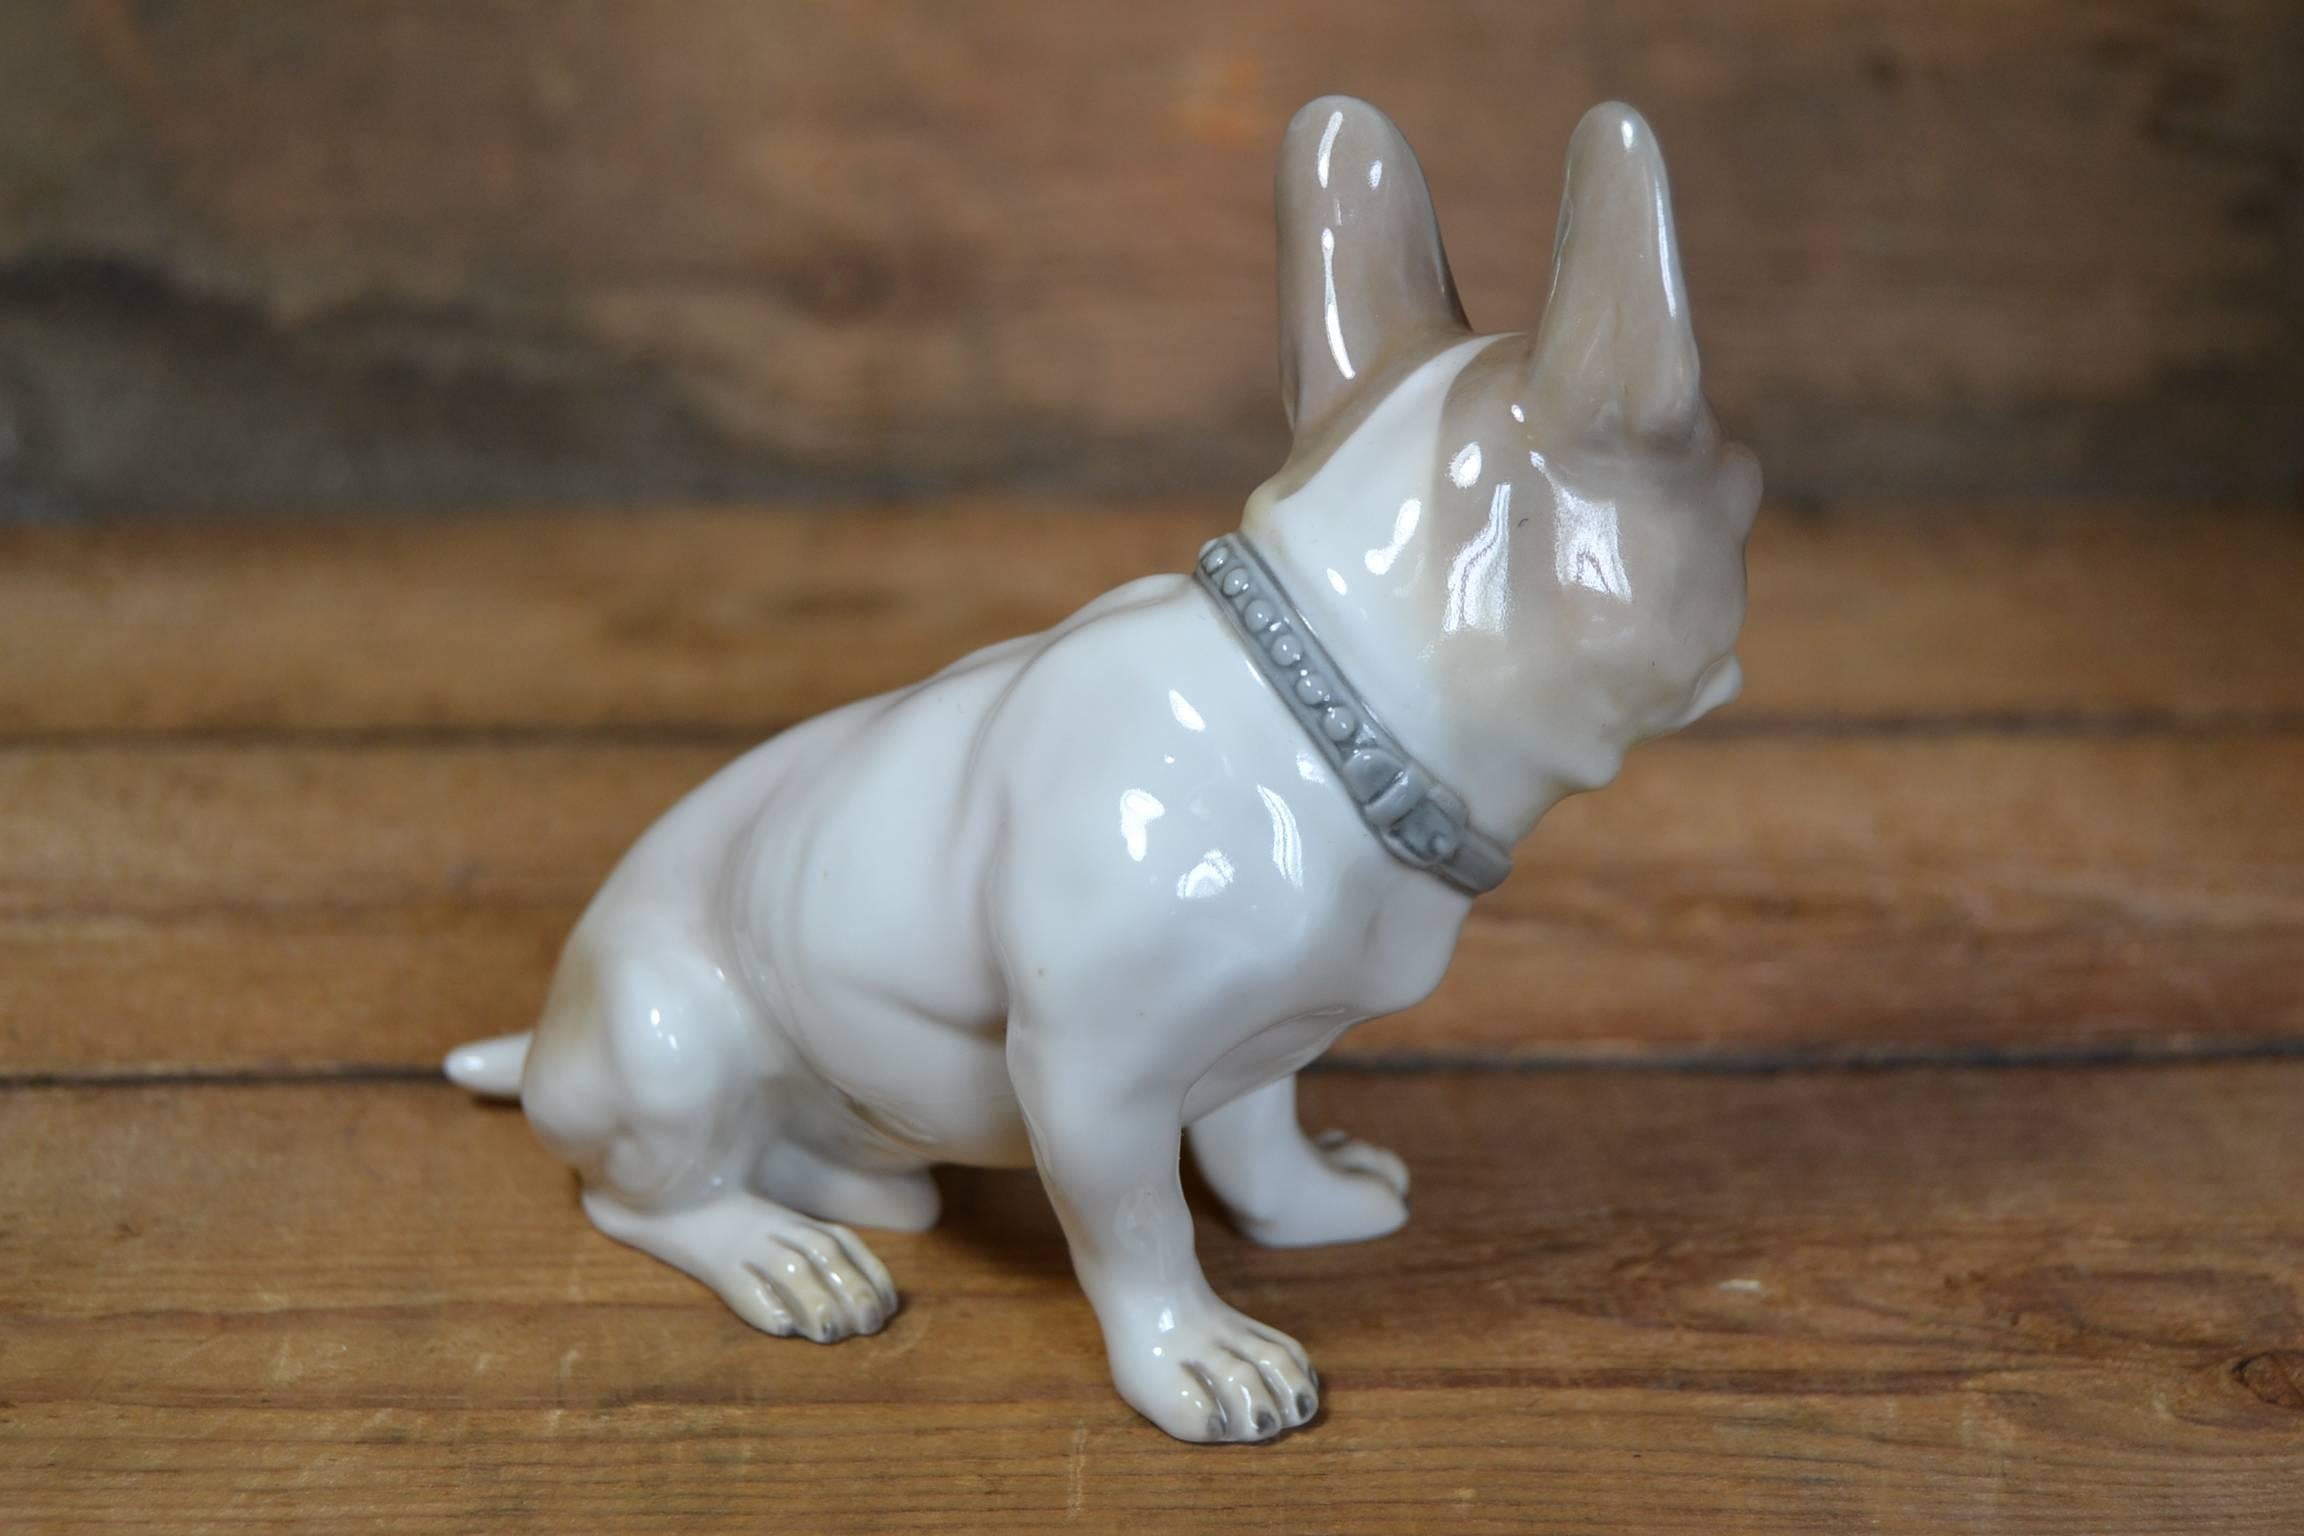 french bulldog porcelain figurines